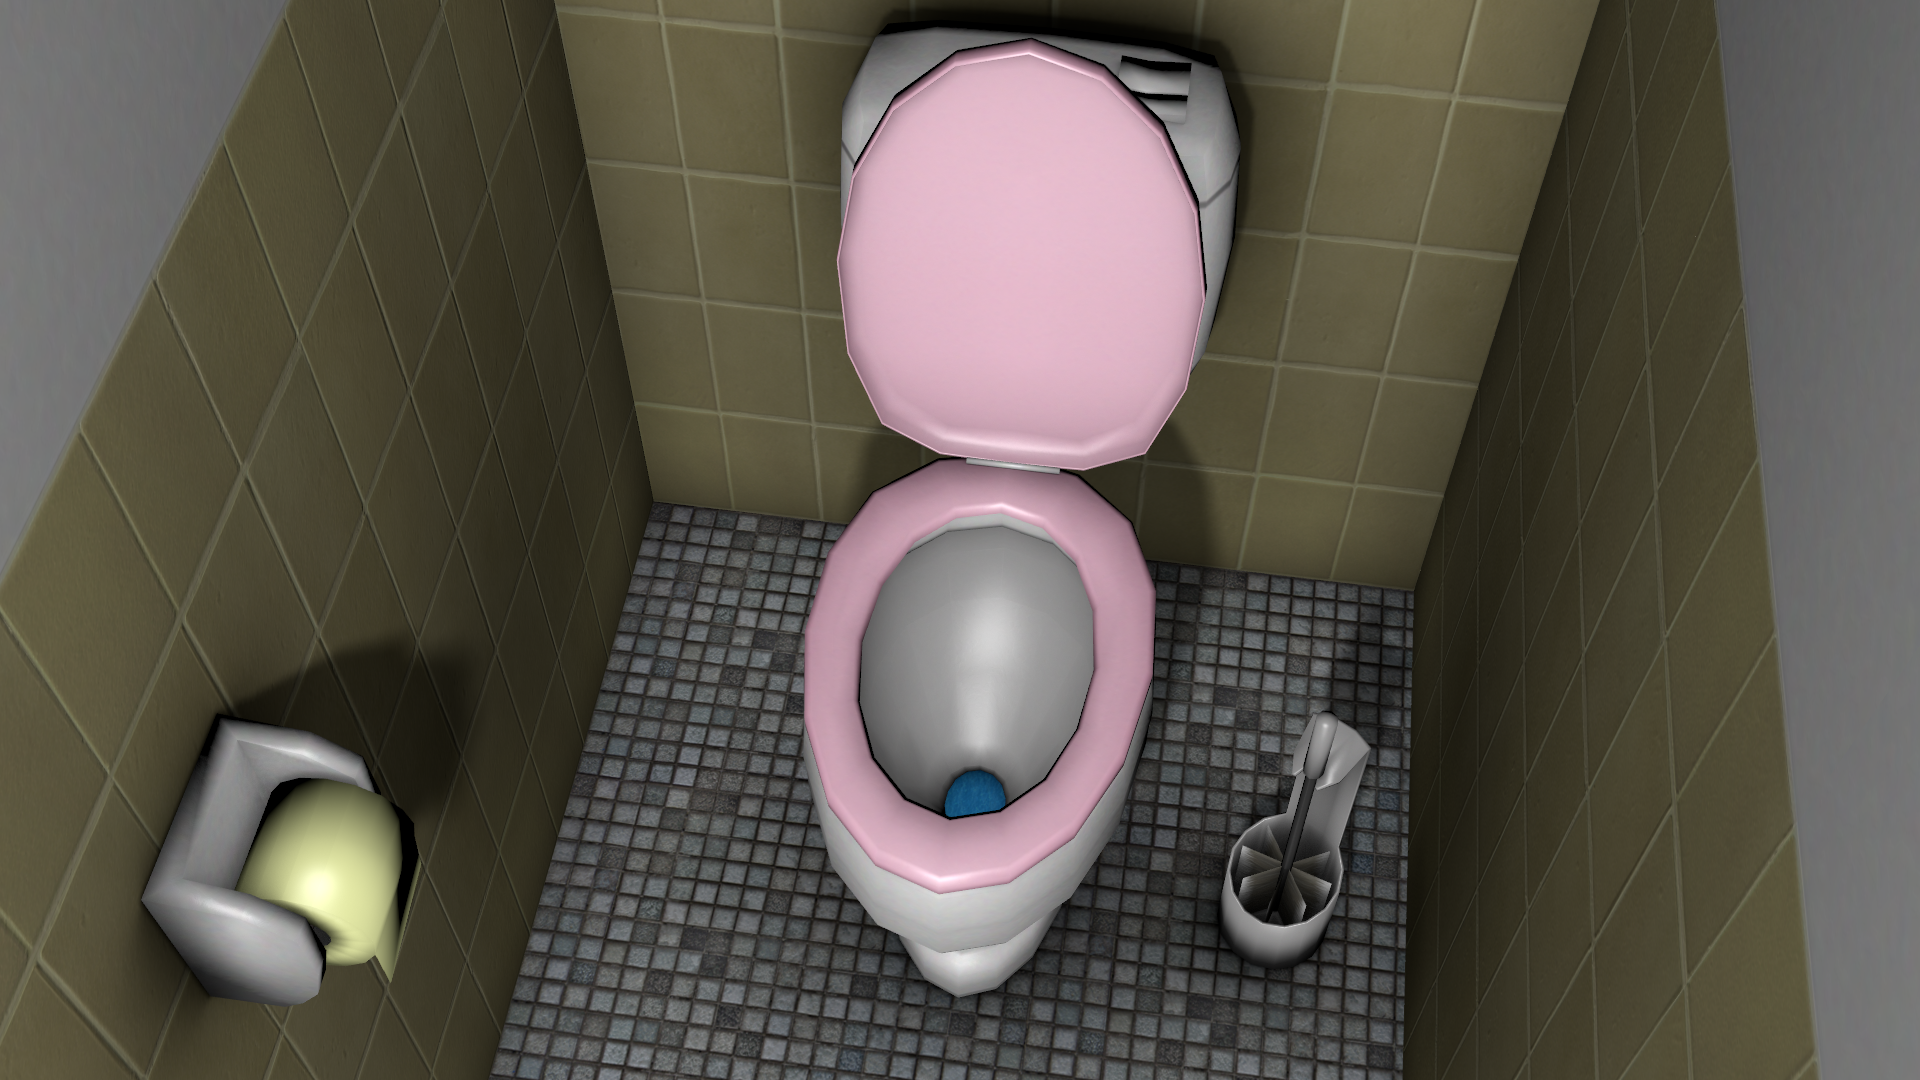 Ходящий туалет игра. Туалетная комната. Туалет в квартире. Дизайн туалета. Игровой унитаз.